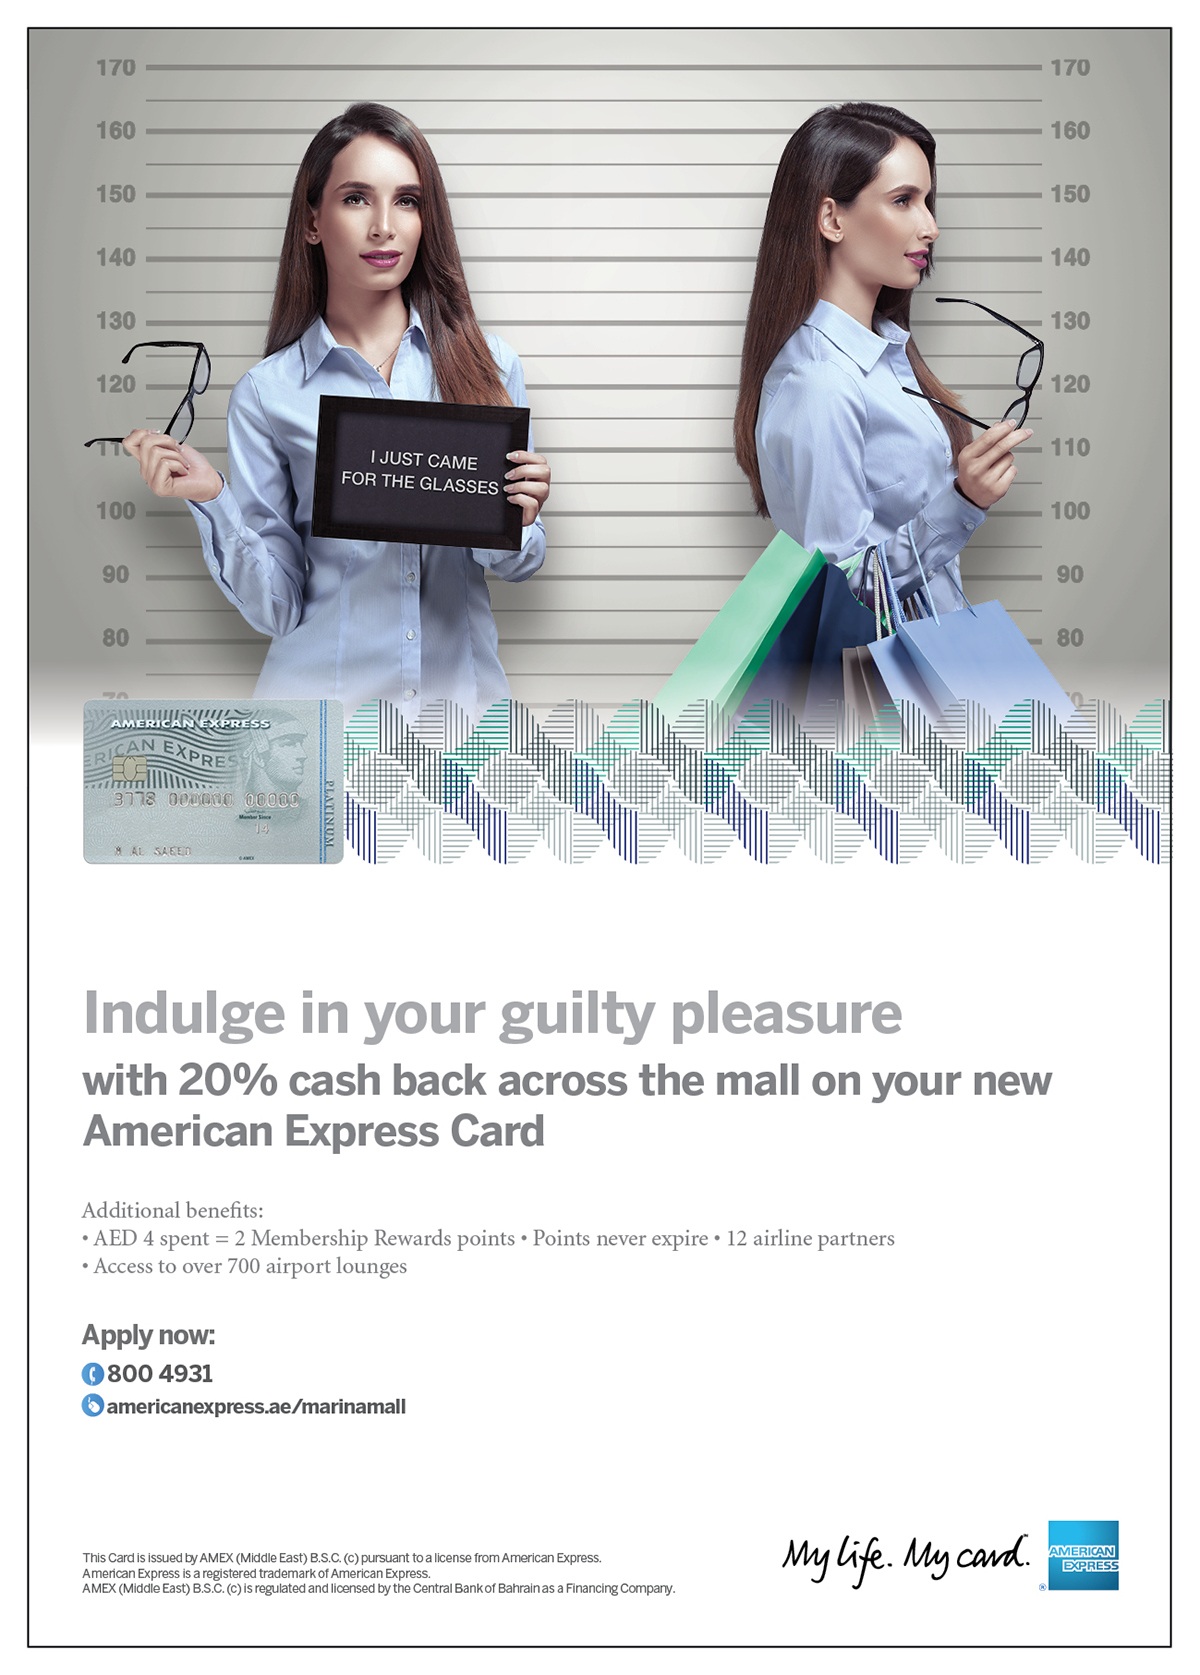 American Express Card guilty pleasure Indulge